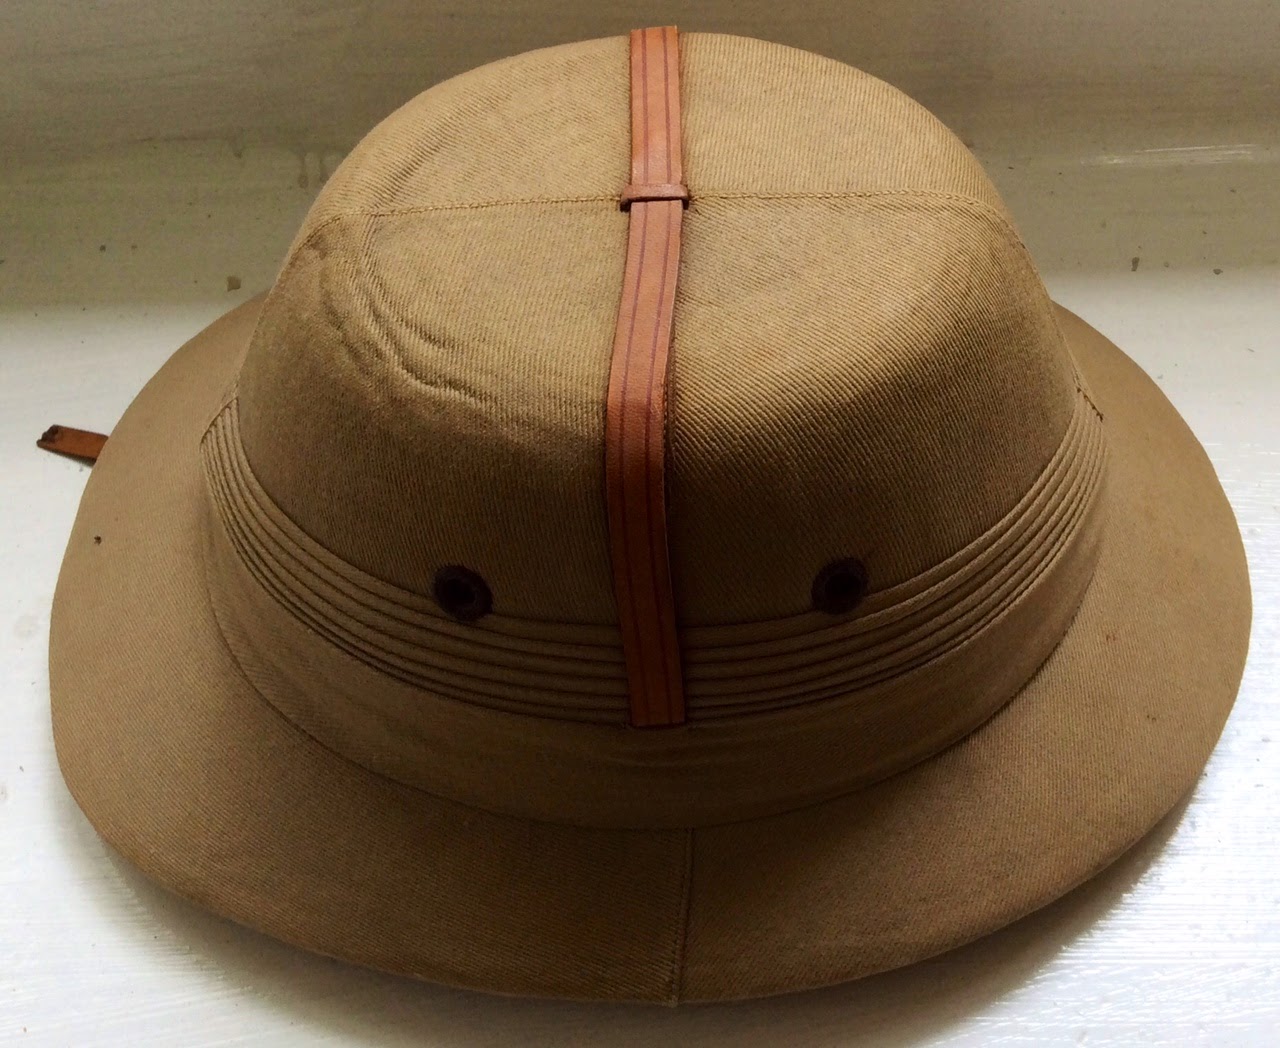 John Callanan Hats: What is a Pith Helmet